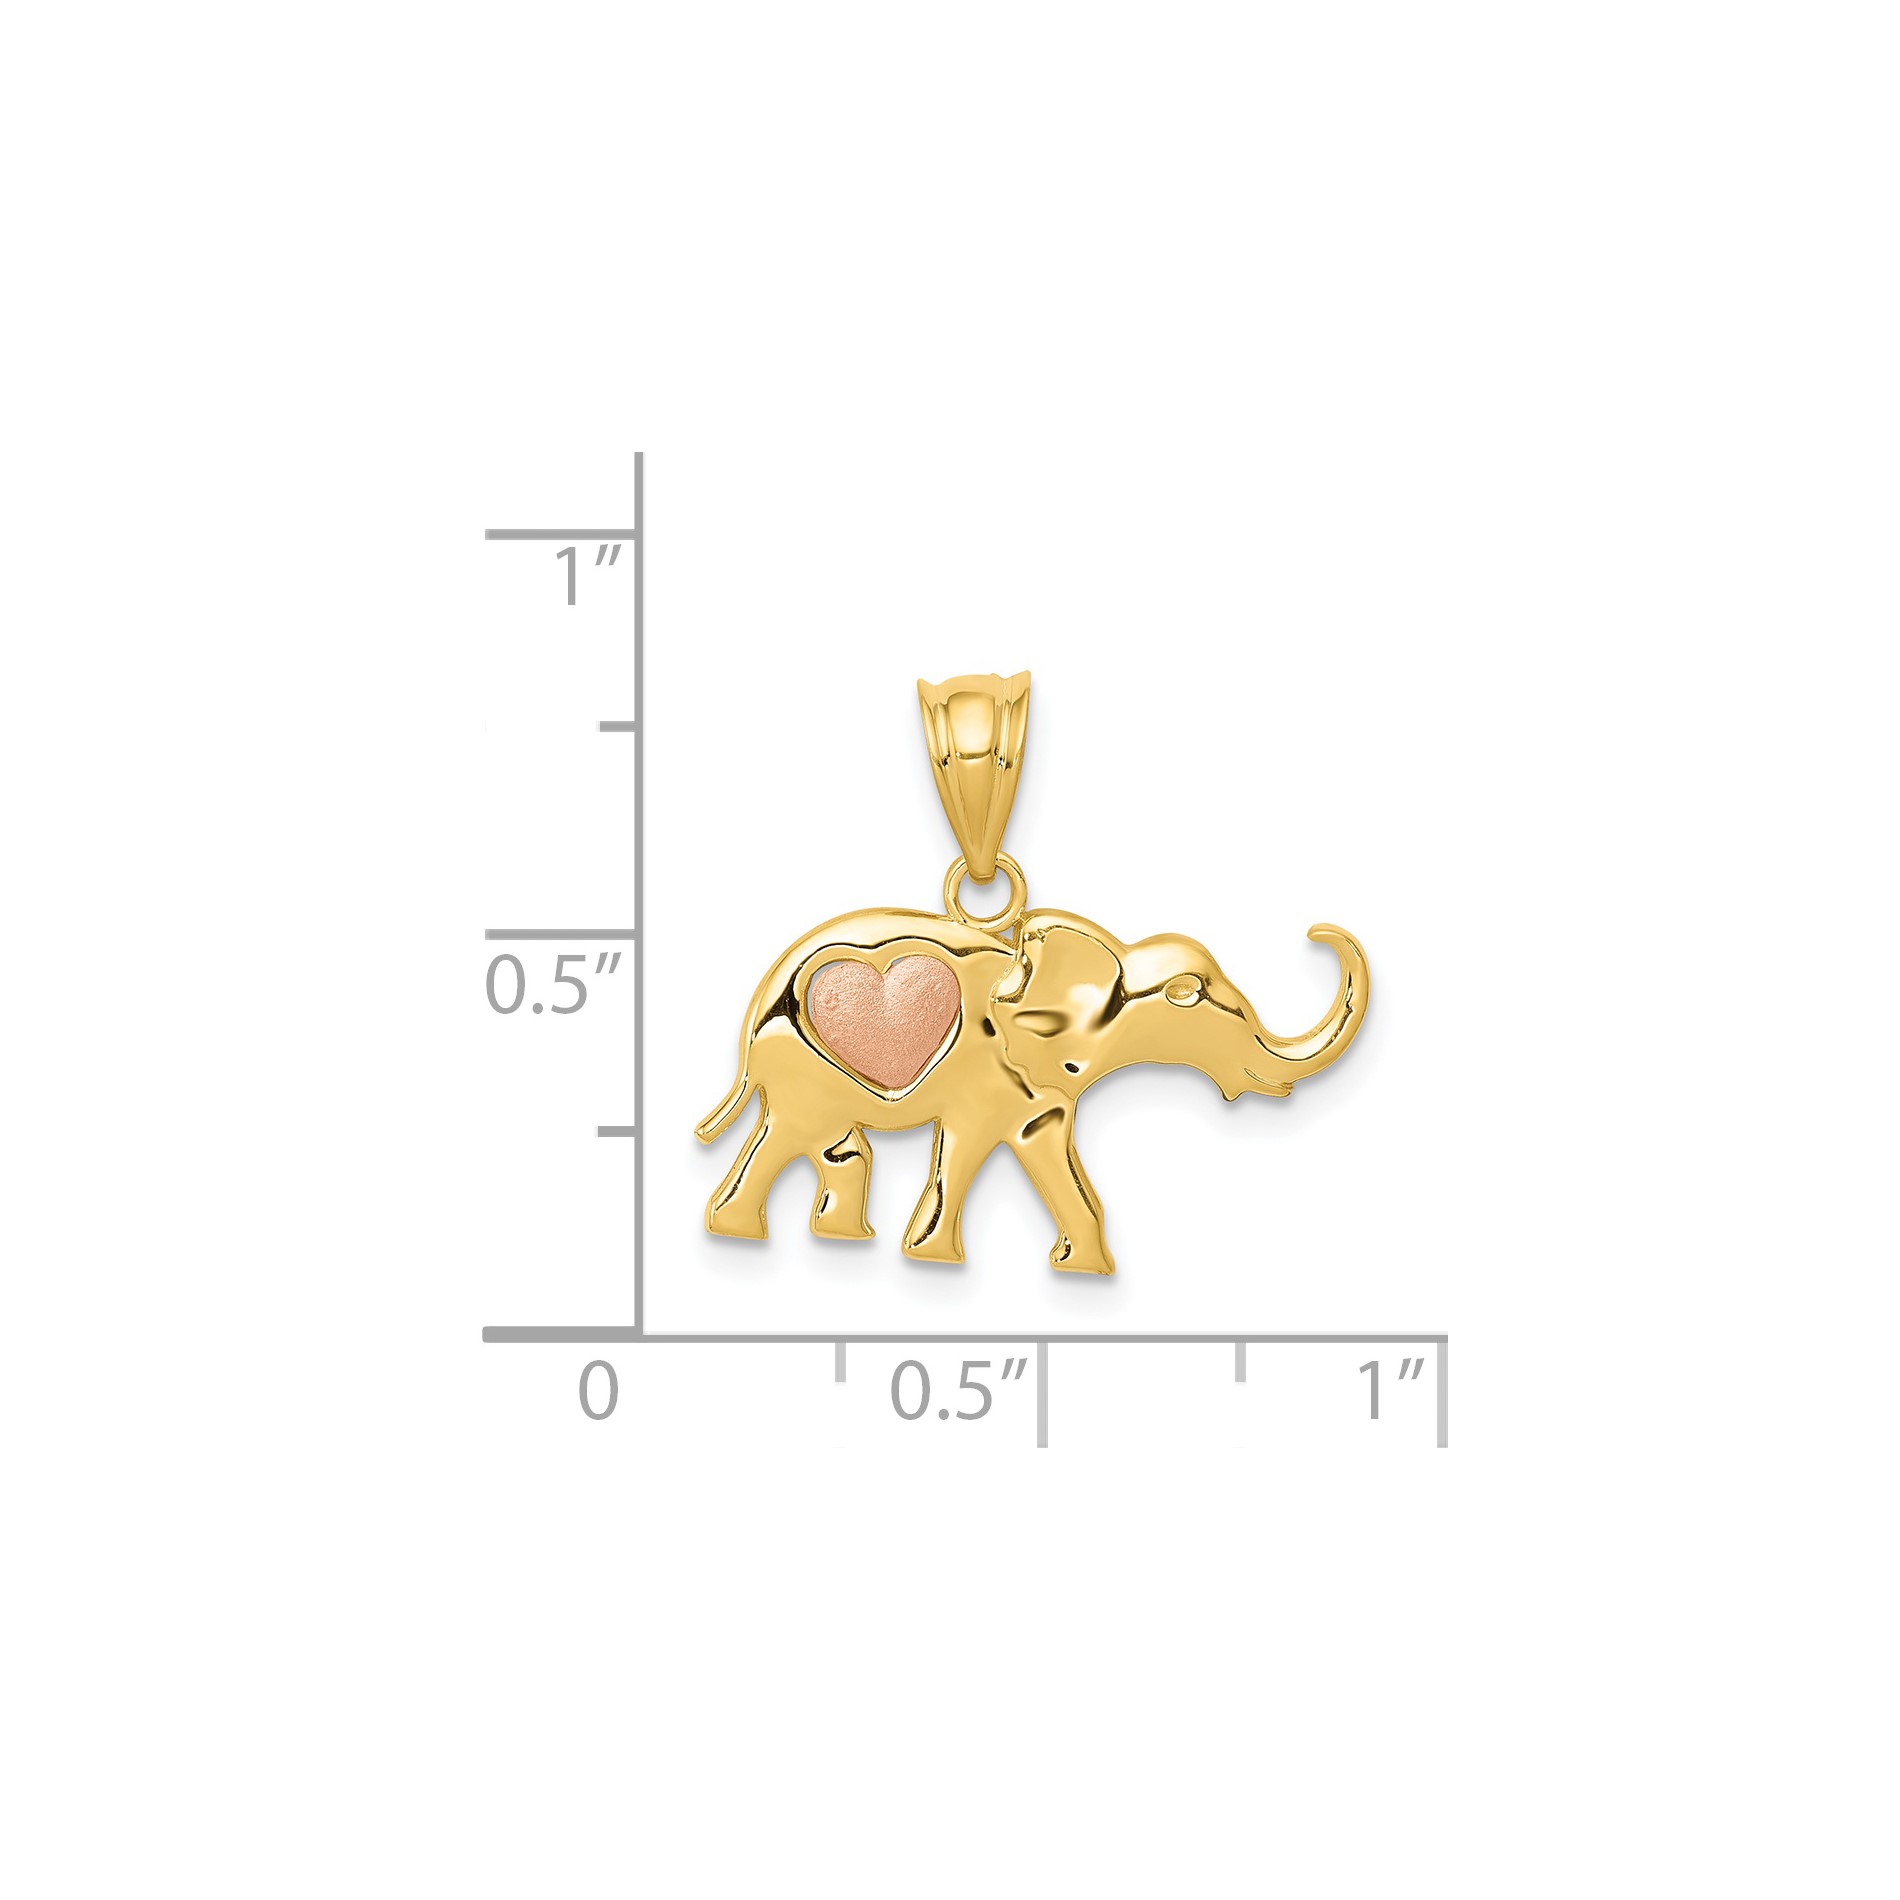 Diamond2Deal 14K Two-Tone Gold Elephant Heart Charm Pendant